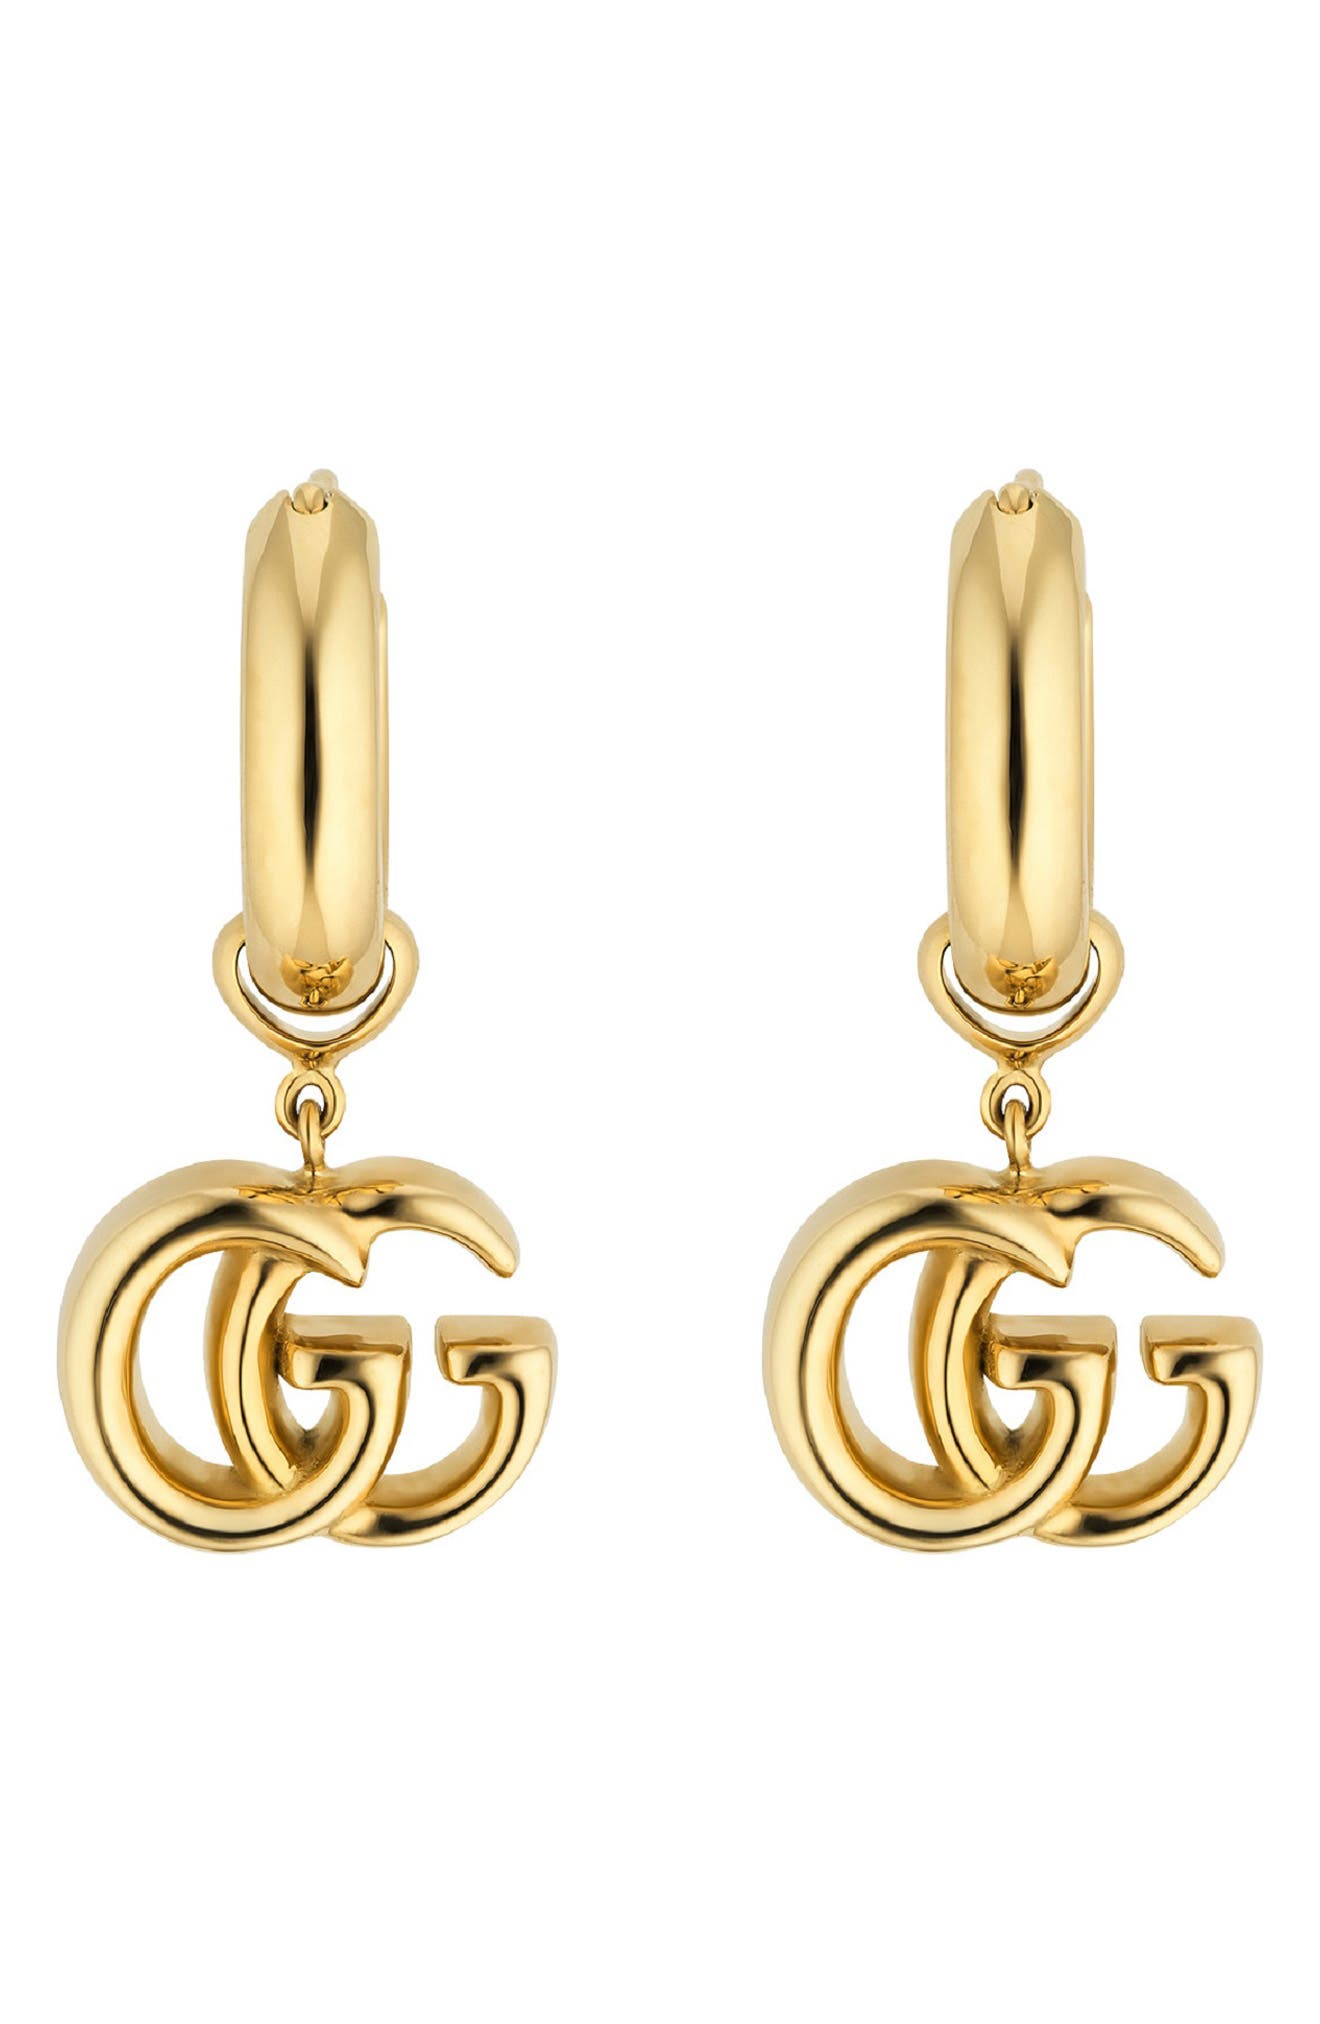 designer earrings gucci